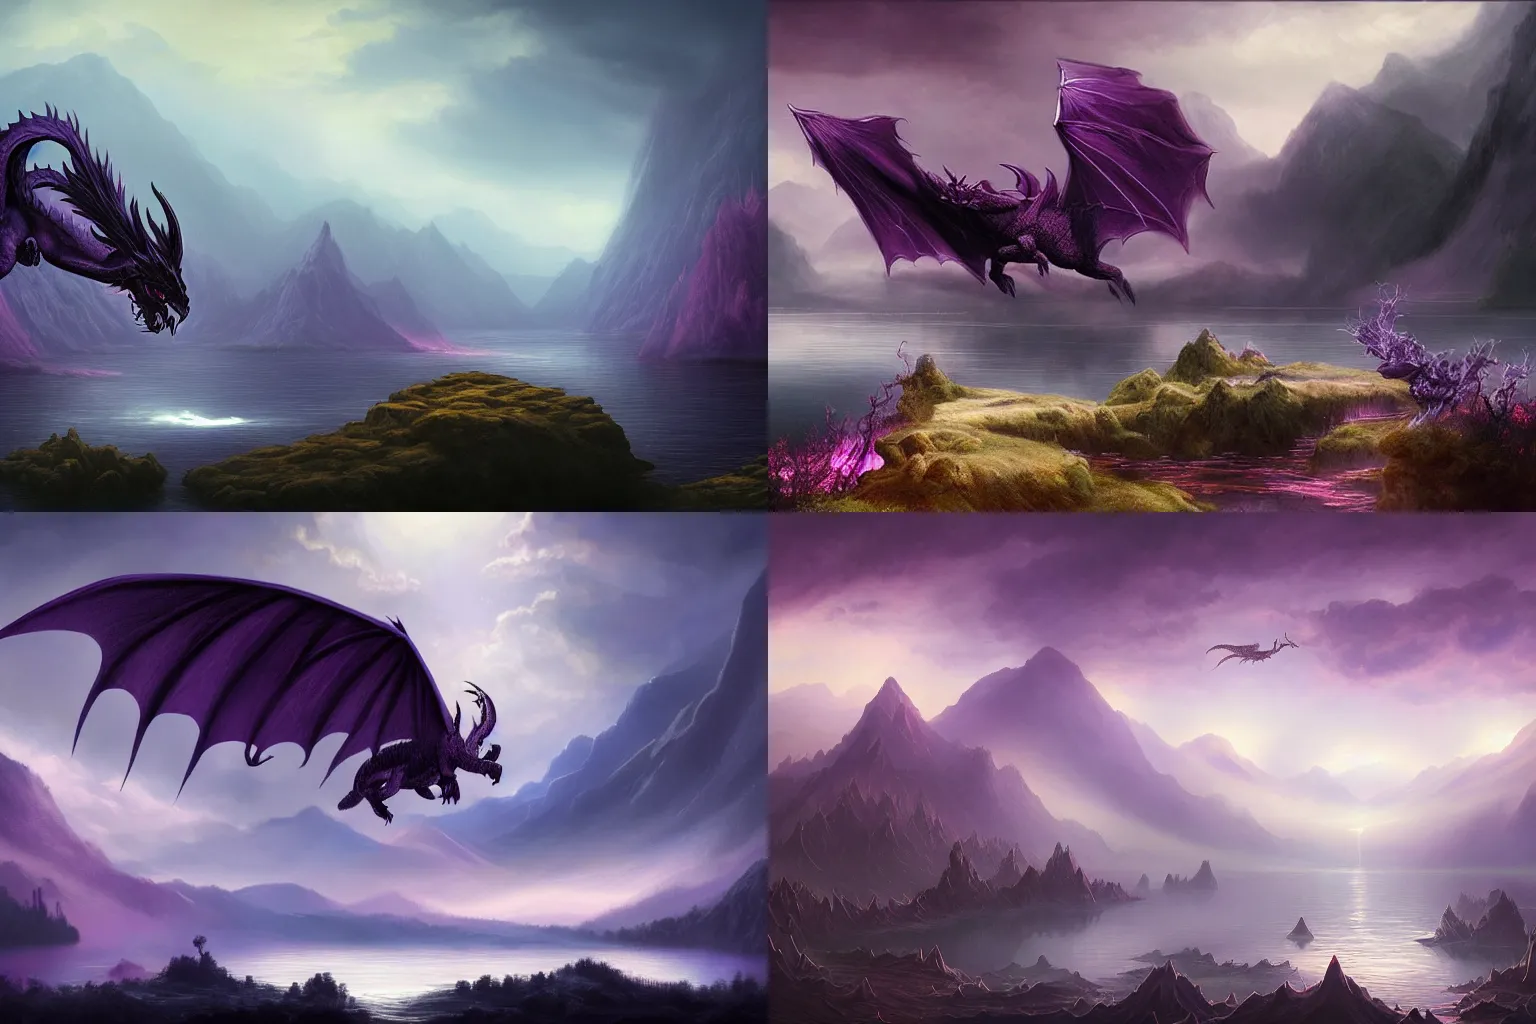 Prompt: landscape masterpiece of a fantasy dark purple dragon, flying over a lake, by Sandara or by Noah Bradley, dark dusk atmosphere, some sparkles, ambient fog